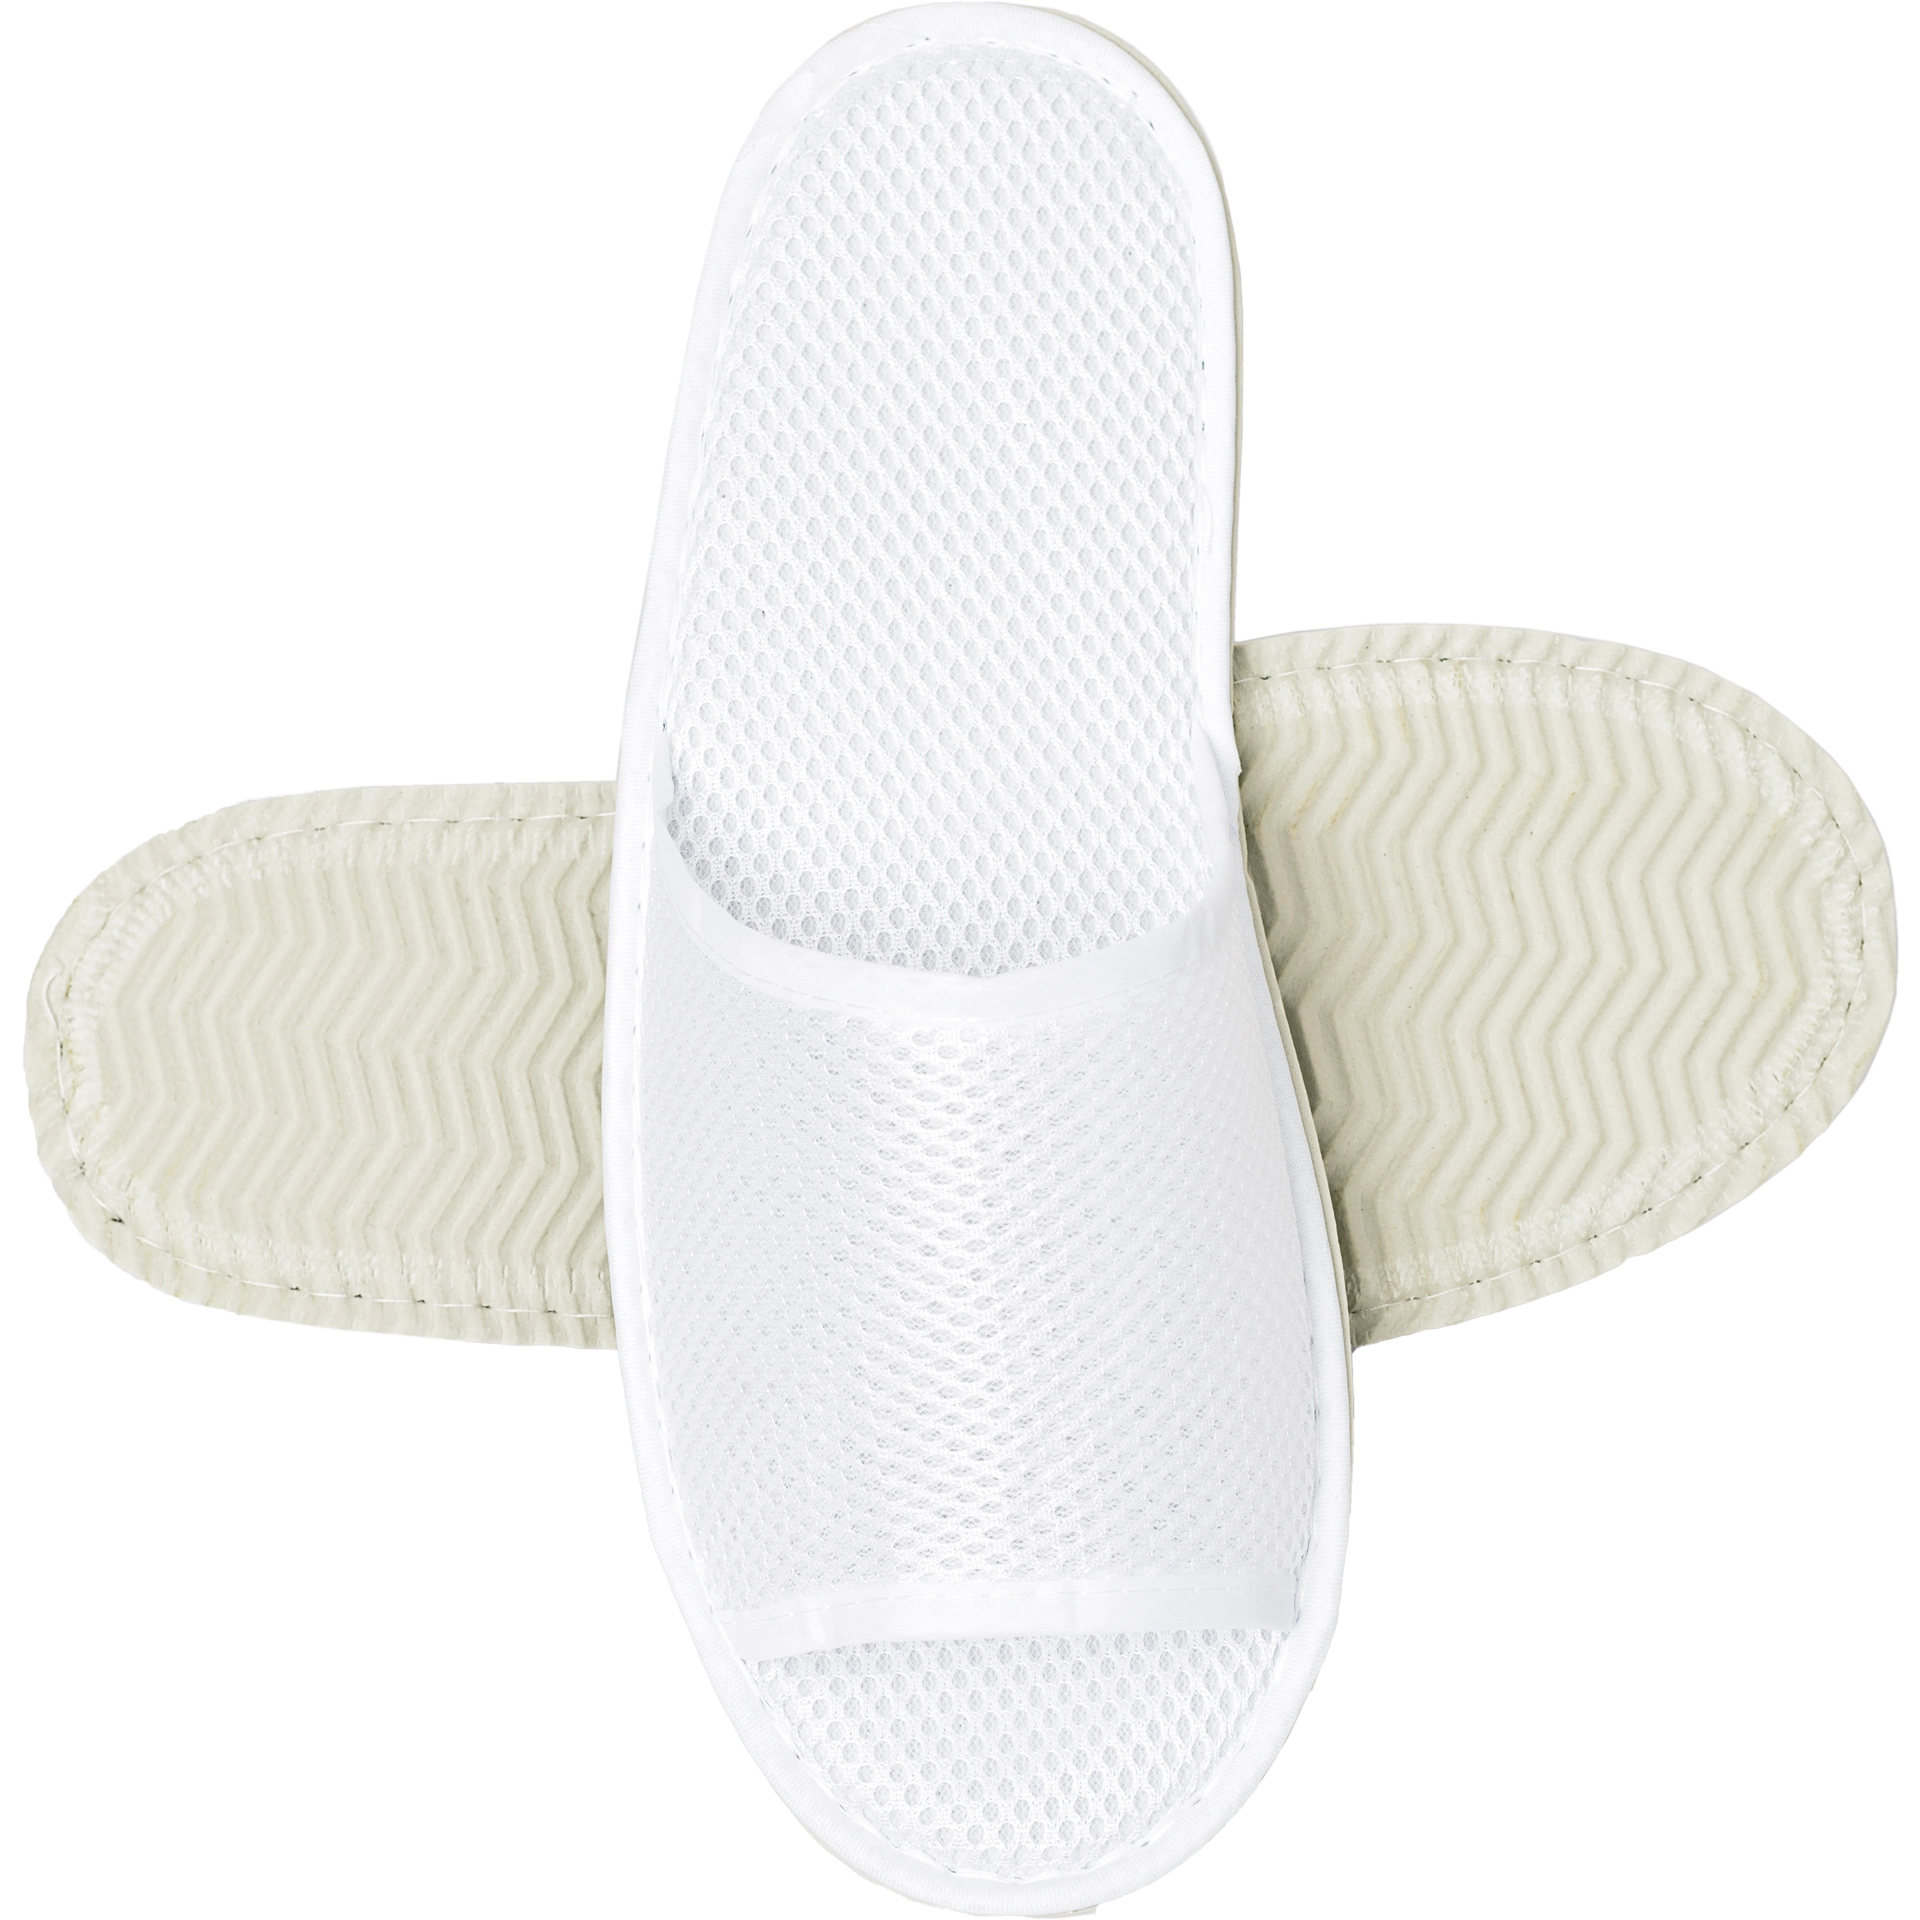 Pantofola Wellness aperta PVC Rio | suola 5 mm a vista | 28,5 cm stampa 1 colore nastro satin